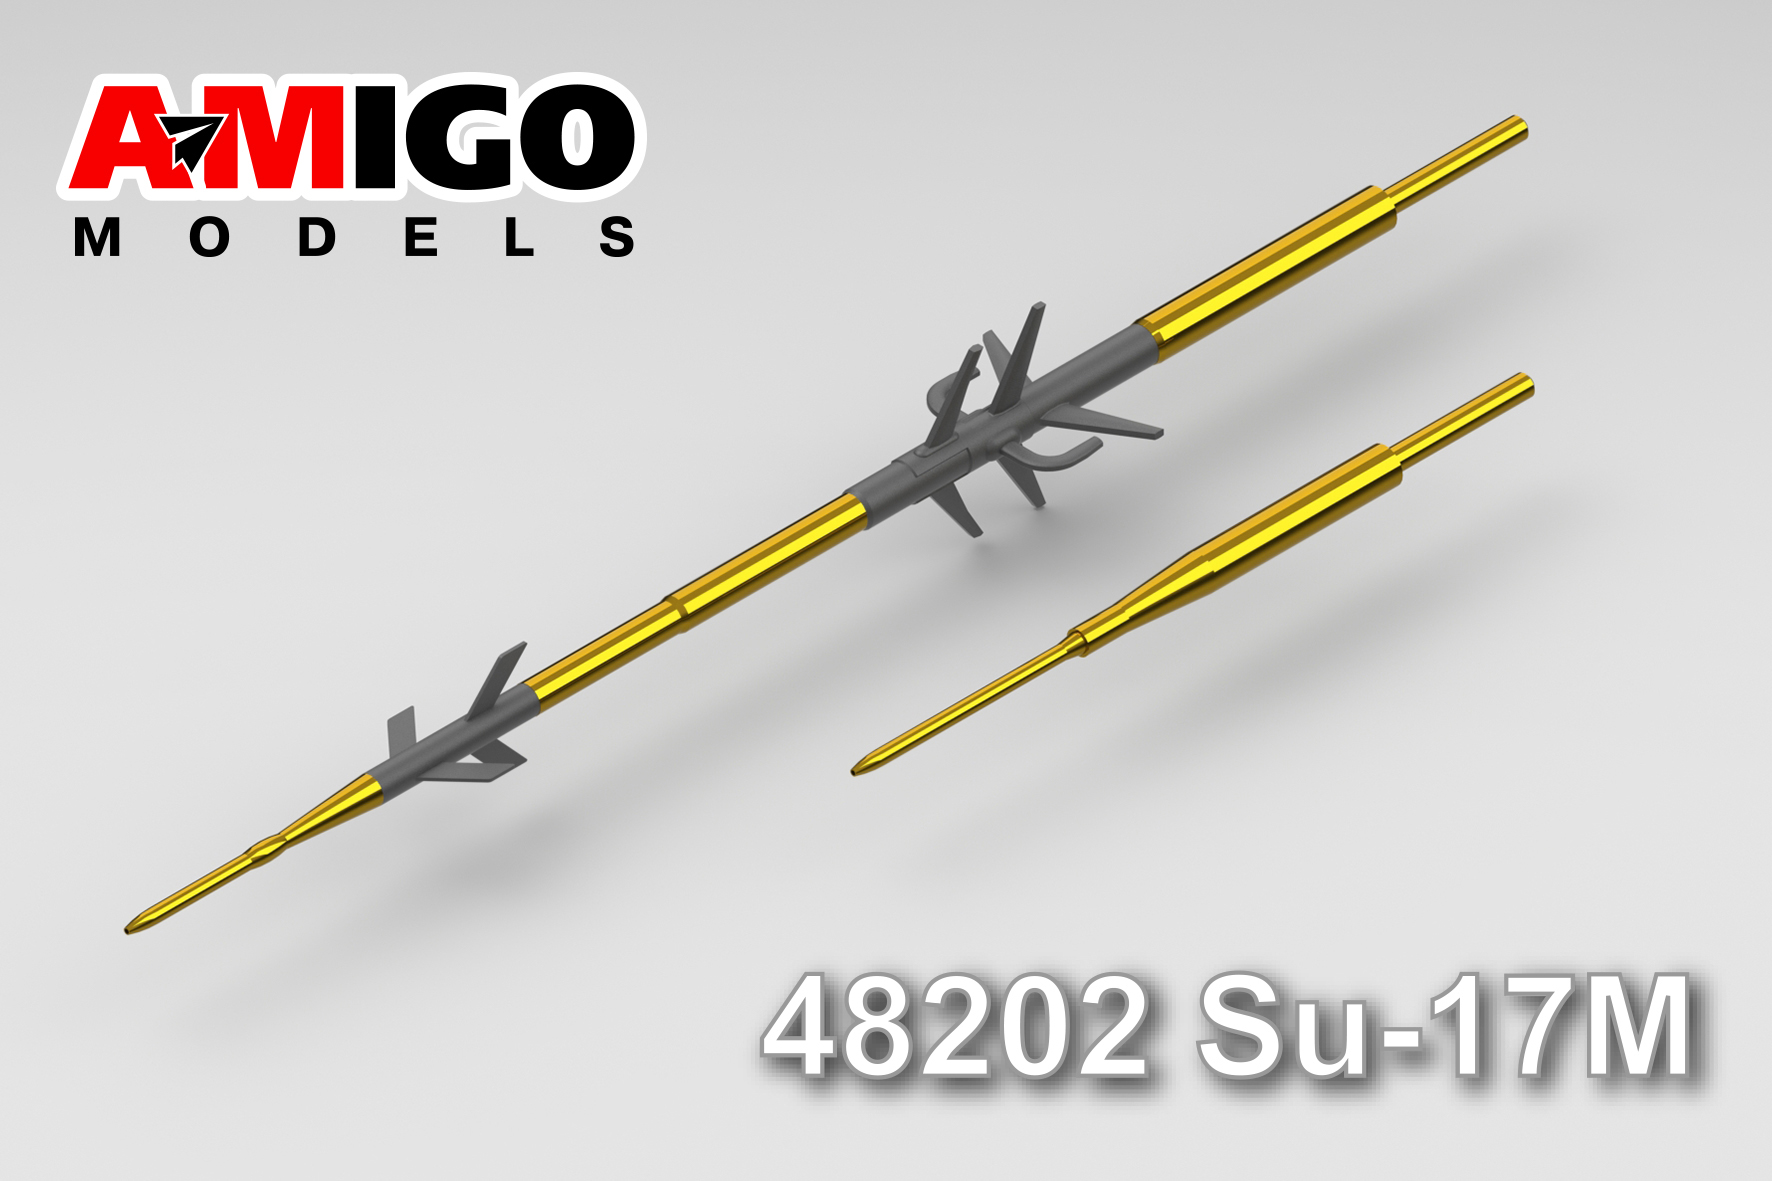 Aircraft detailing sets (brass) 1/48 Pitot tube of Su-17M family aircraft (Amigo Models)